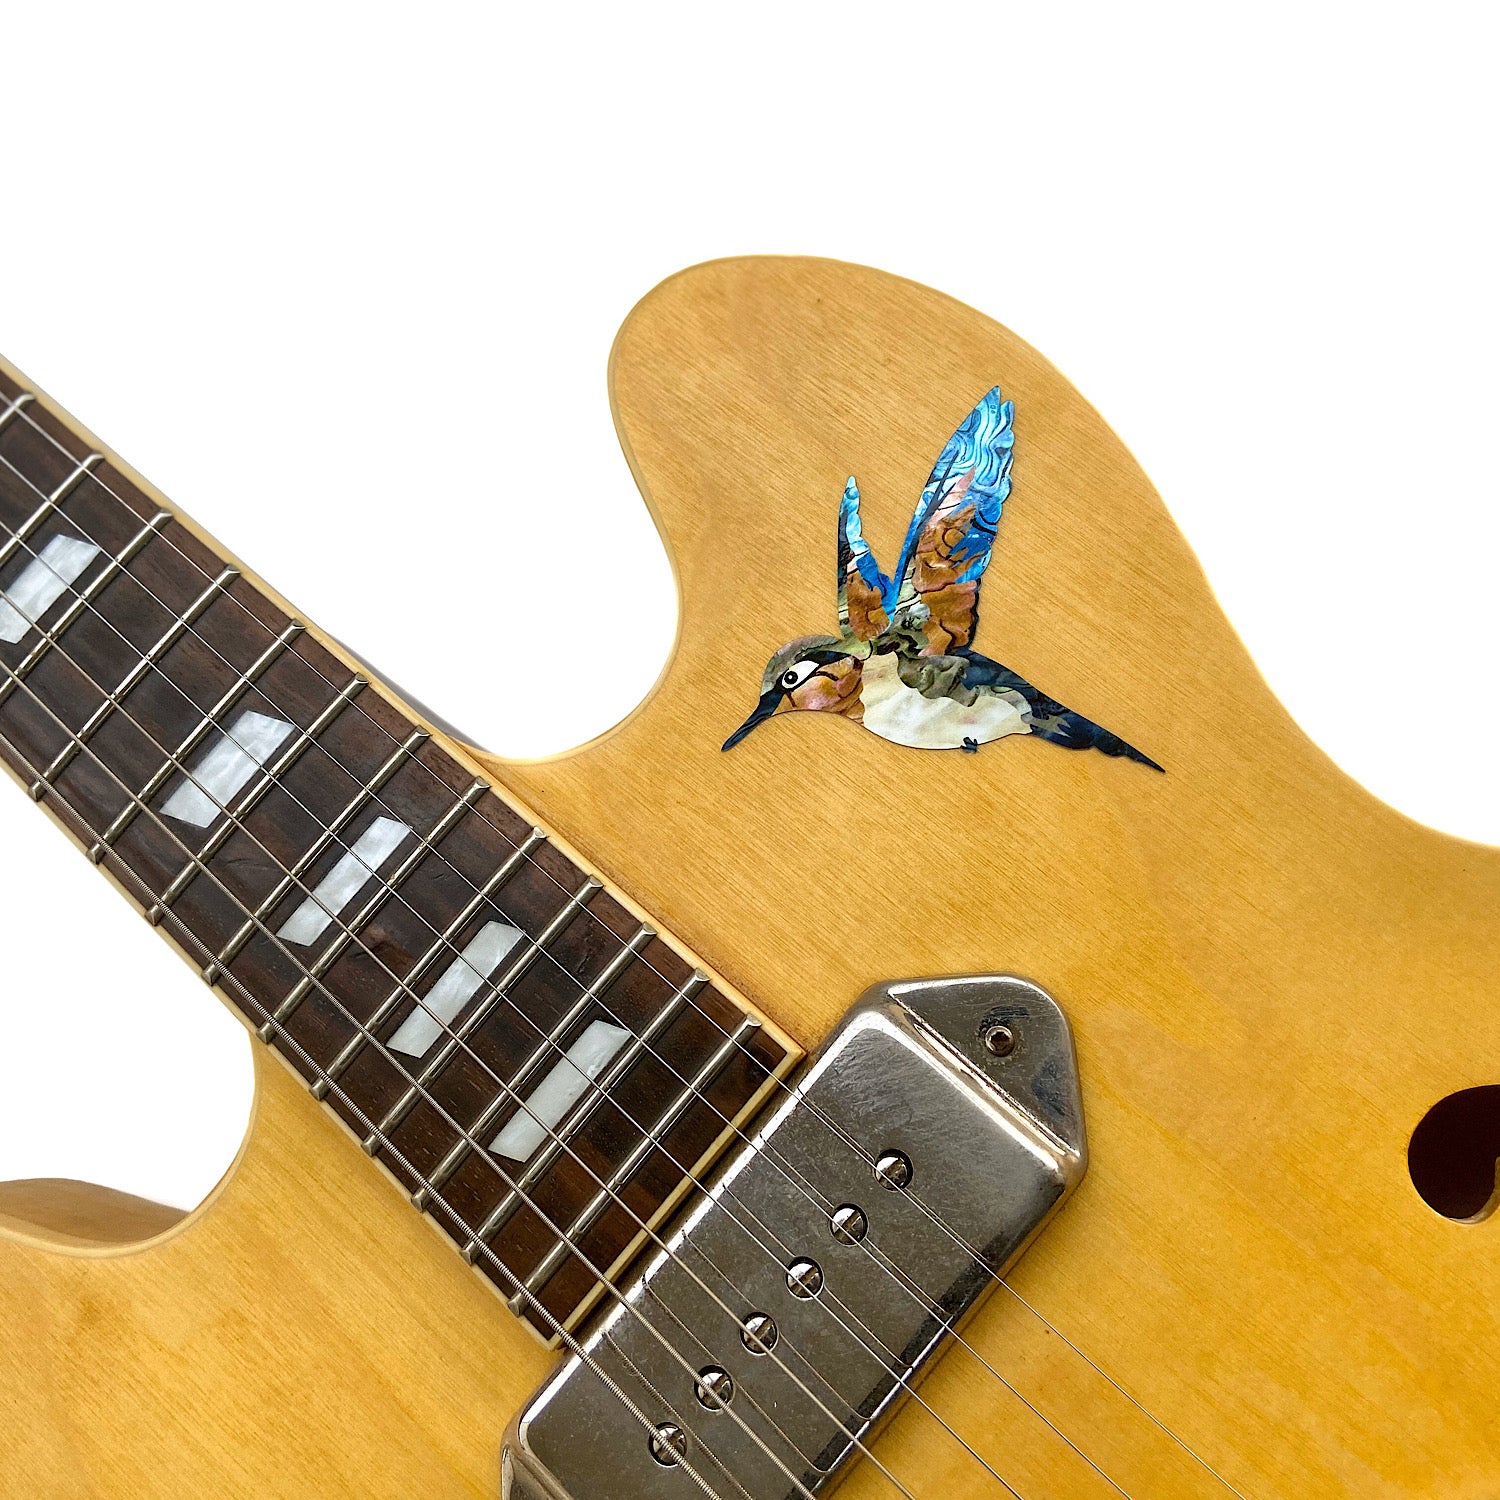 Assorted Hummingbird Abalone Blue Inlay Stickers Decals Pickguard Guitar